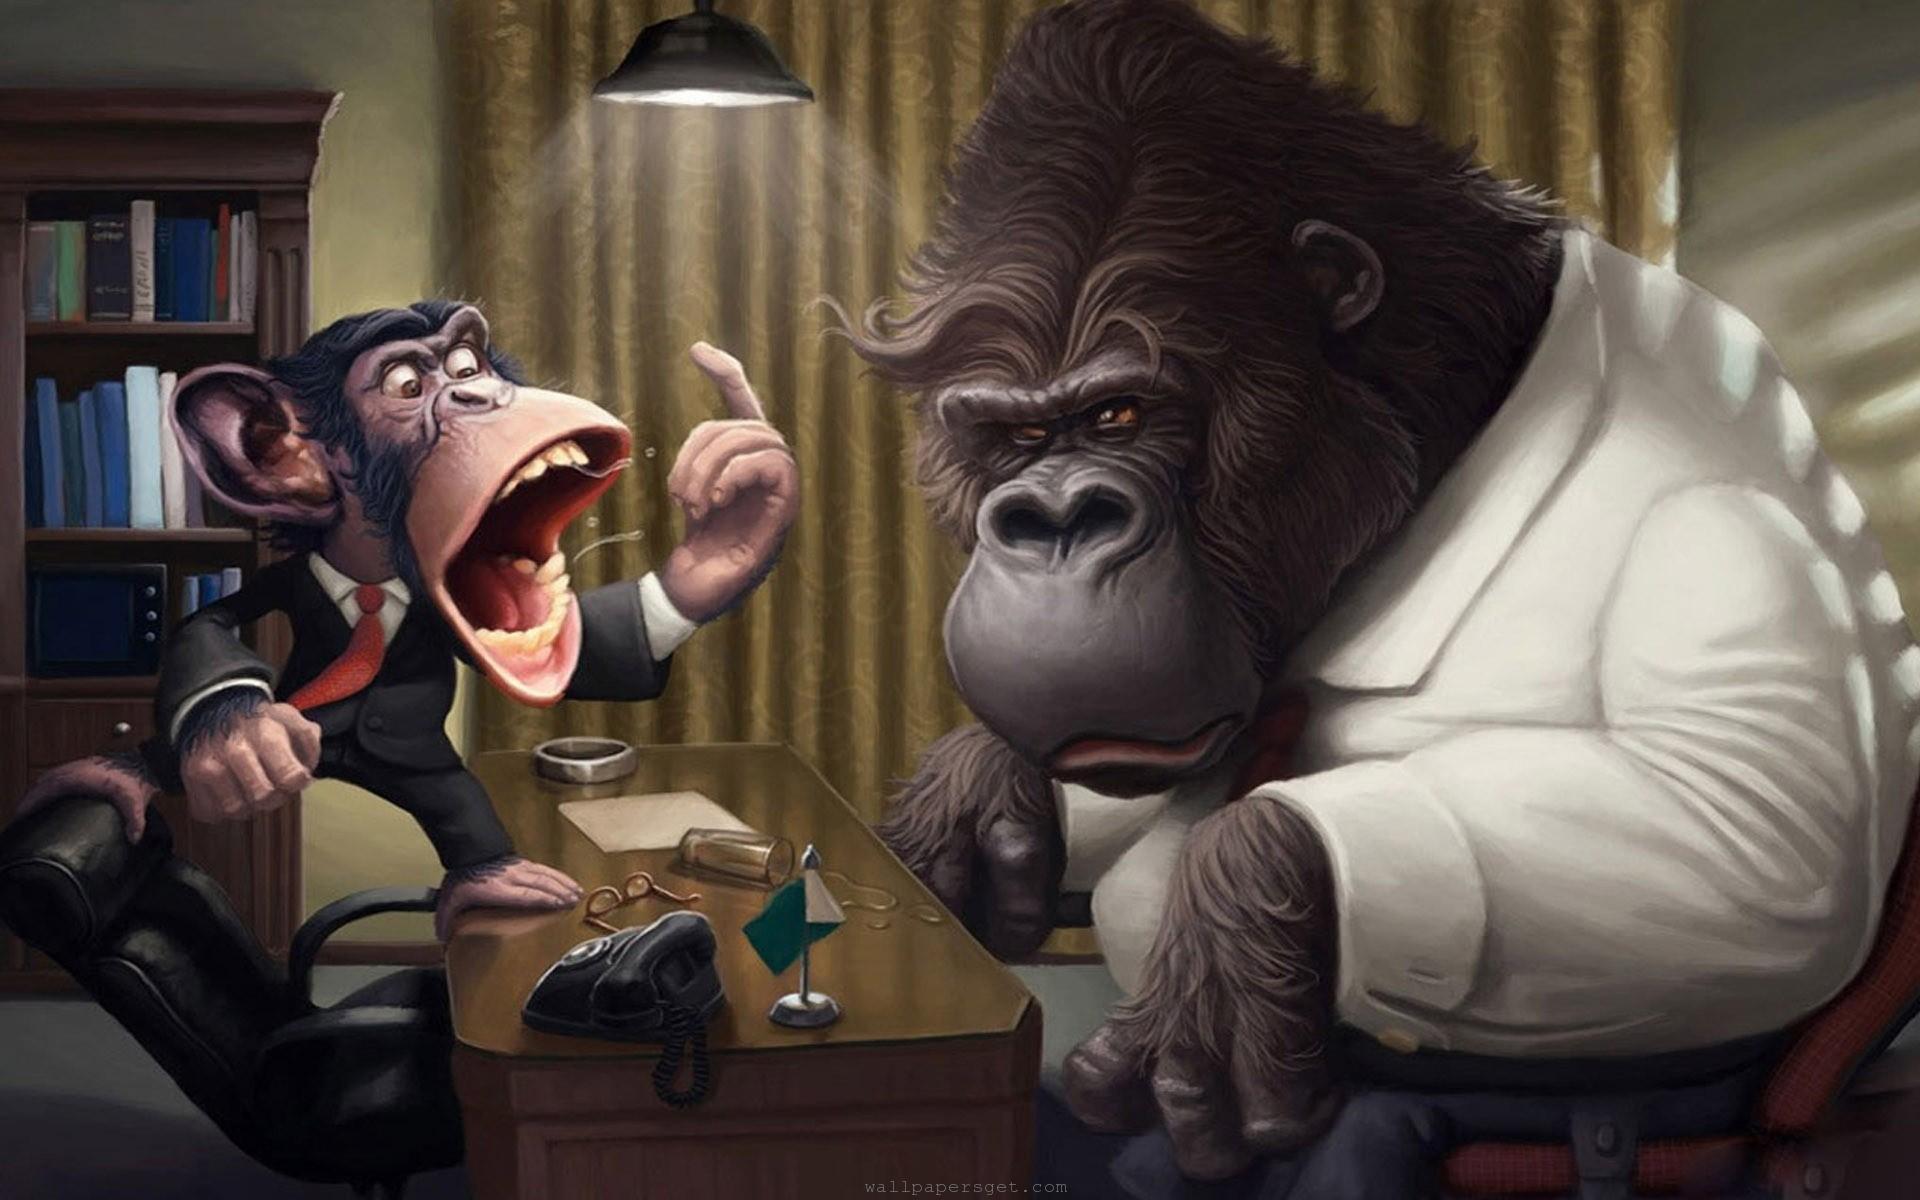 bizarre funny cartoon monkeys - wallpapersget.com